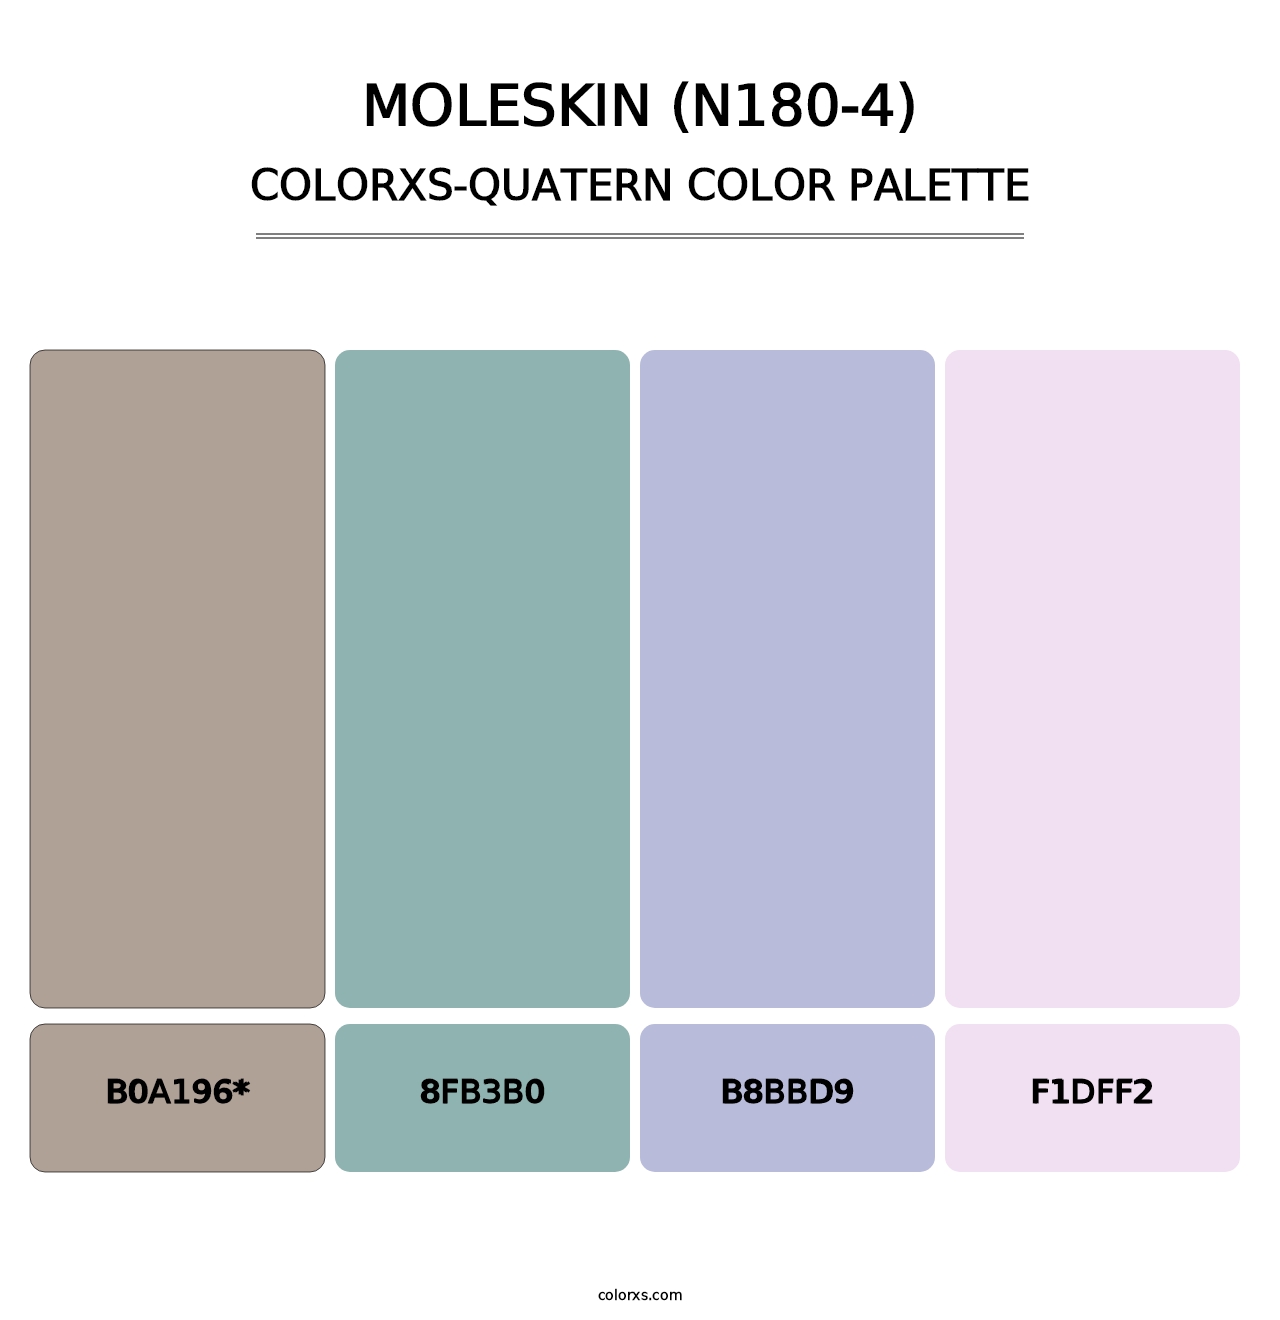 Moleskin (N180-4) - Colorxs Quatern Palette